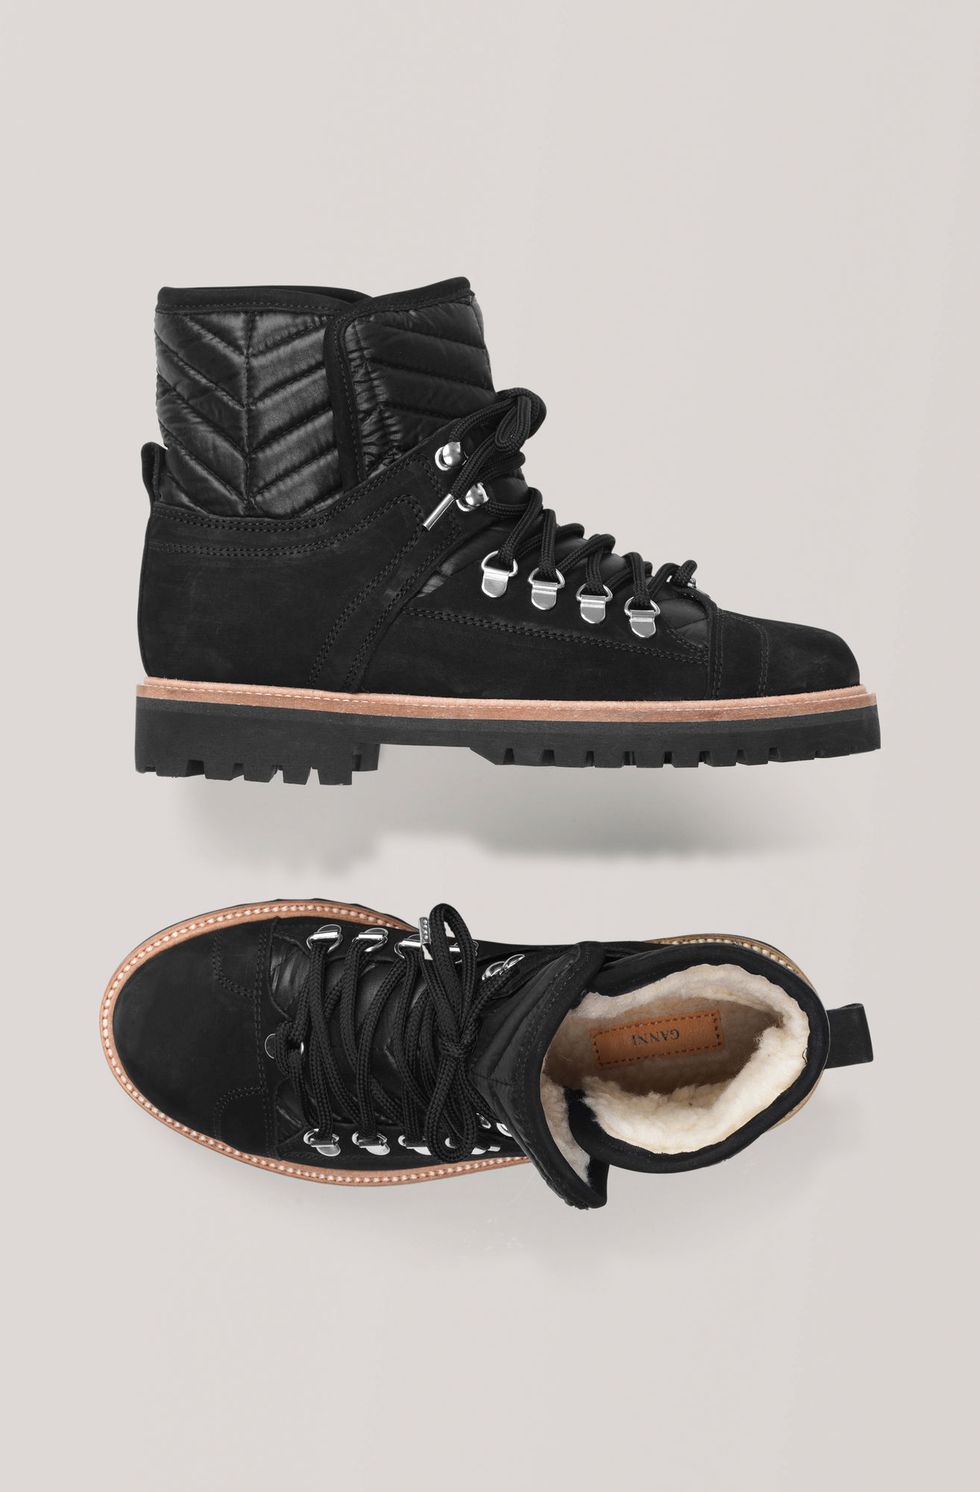 scarponcini da montagna 2019, hiking boots, stivlai 2019, moda stivaletti 2019